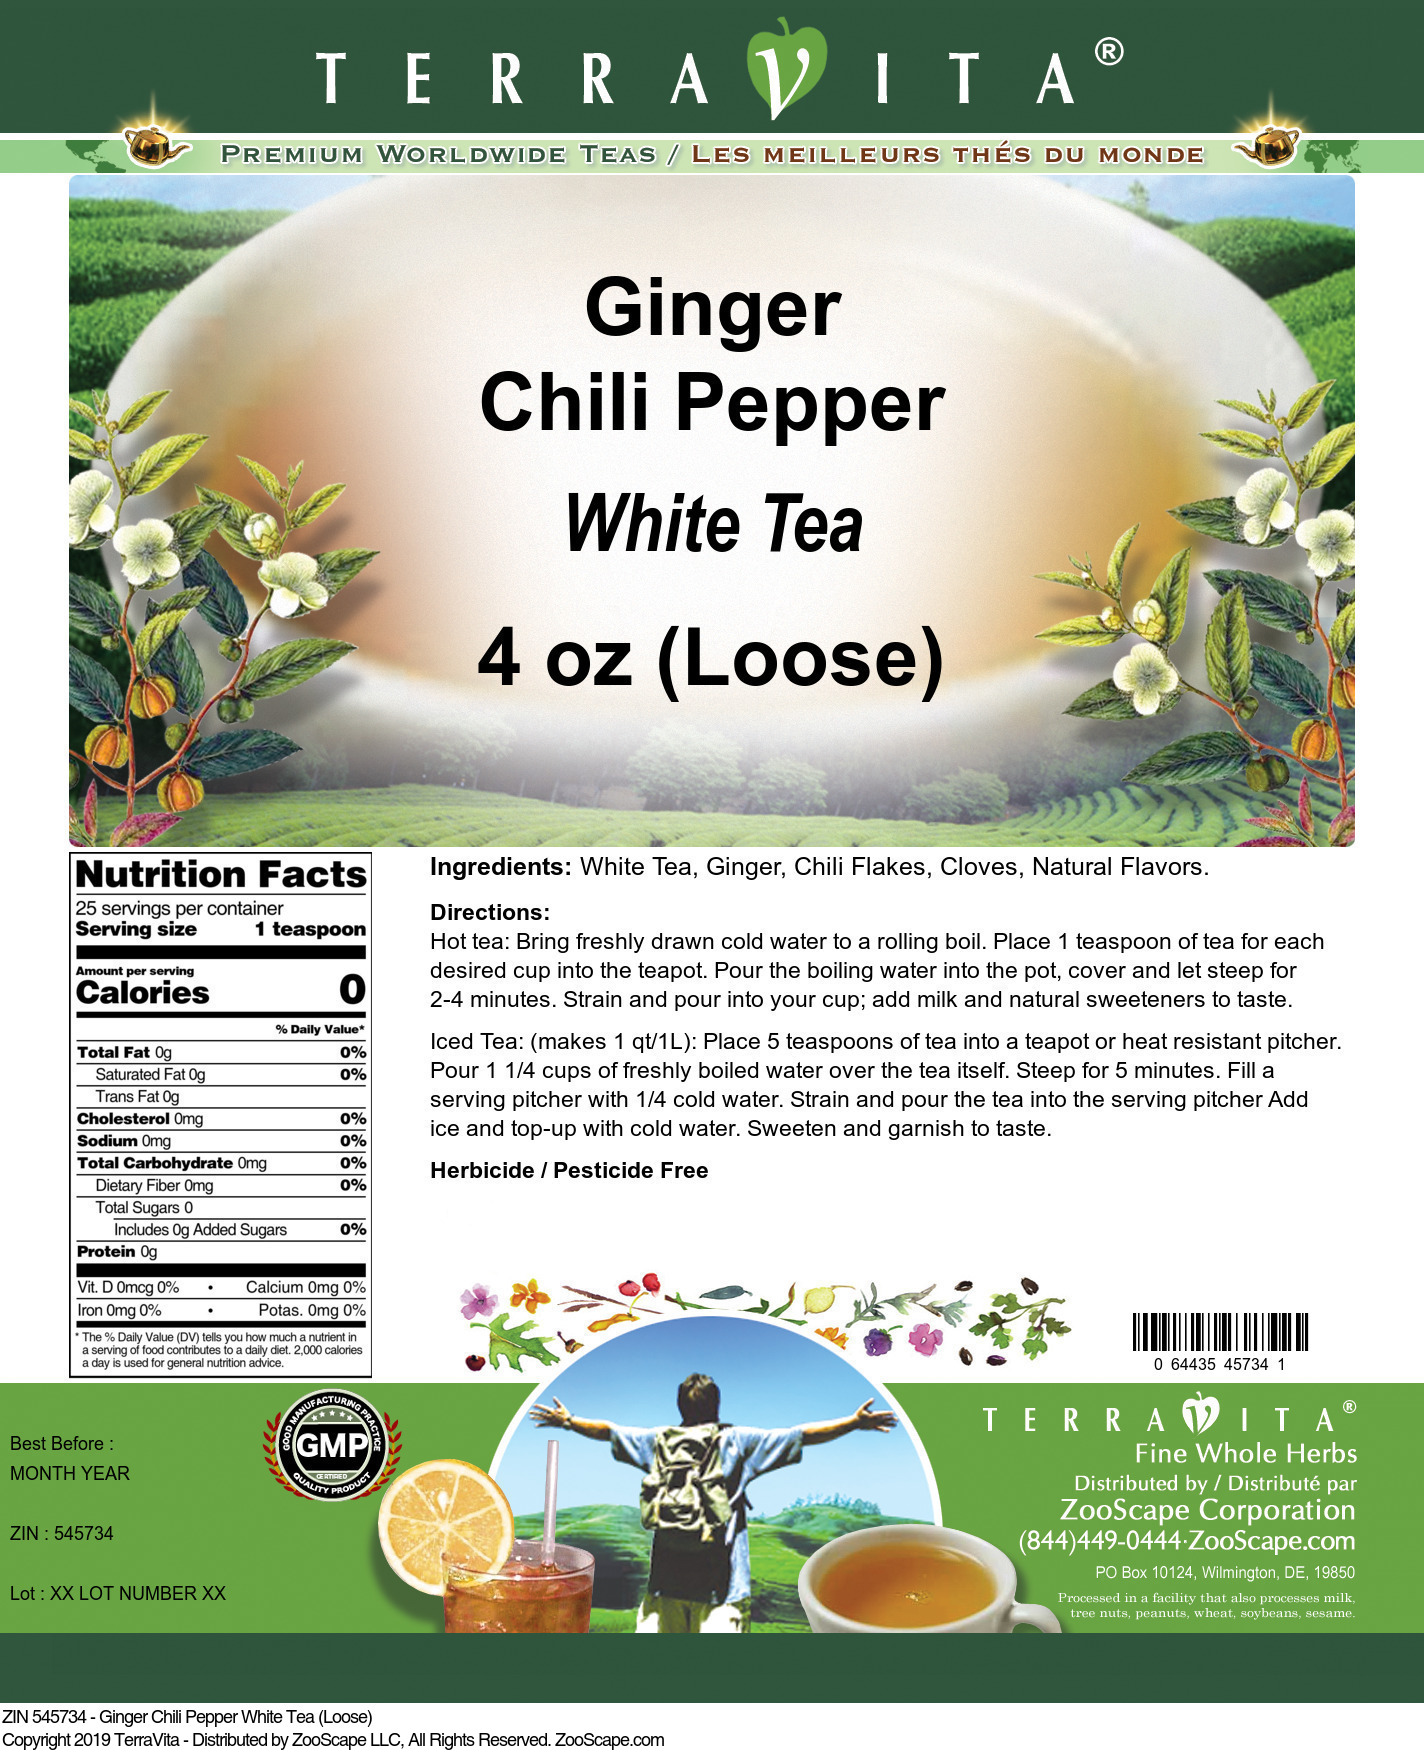 Ginger Chili Pepper White Tea (Loose) - Label